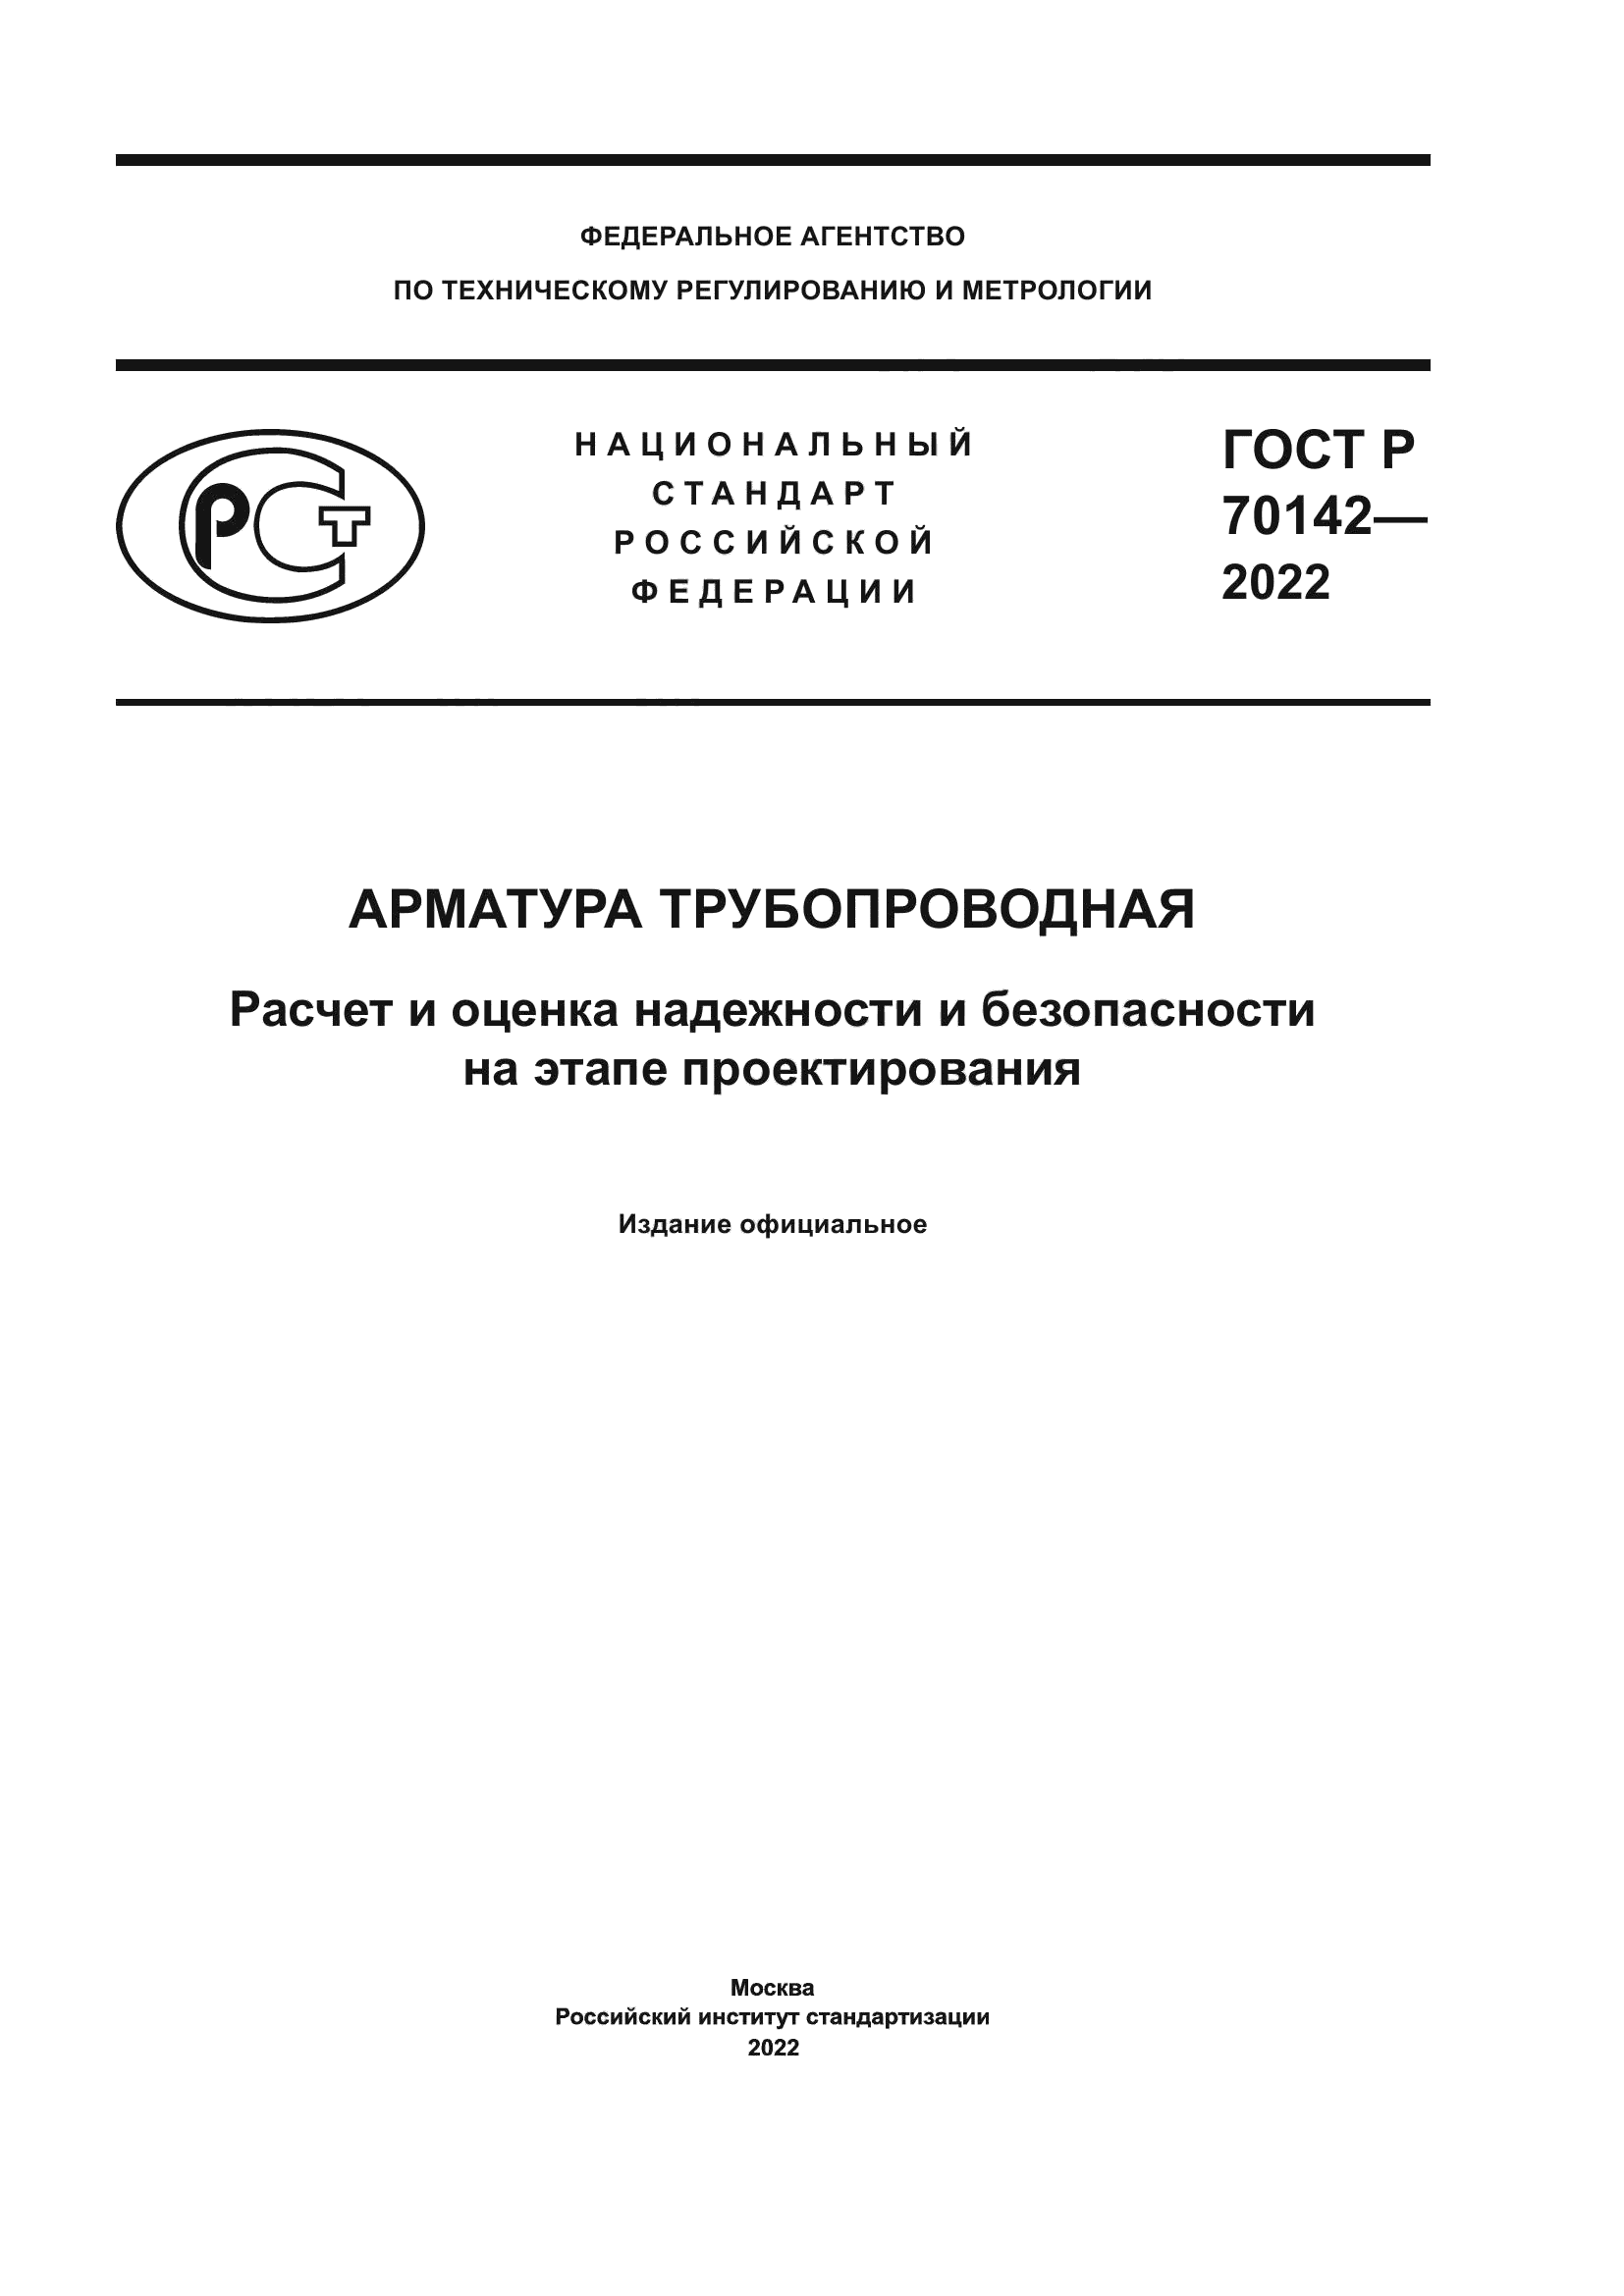 ГОСТ Р 70142-2022